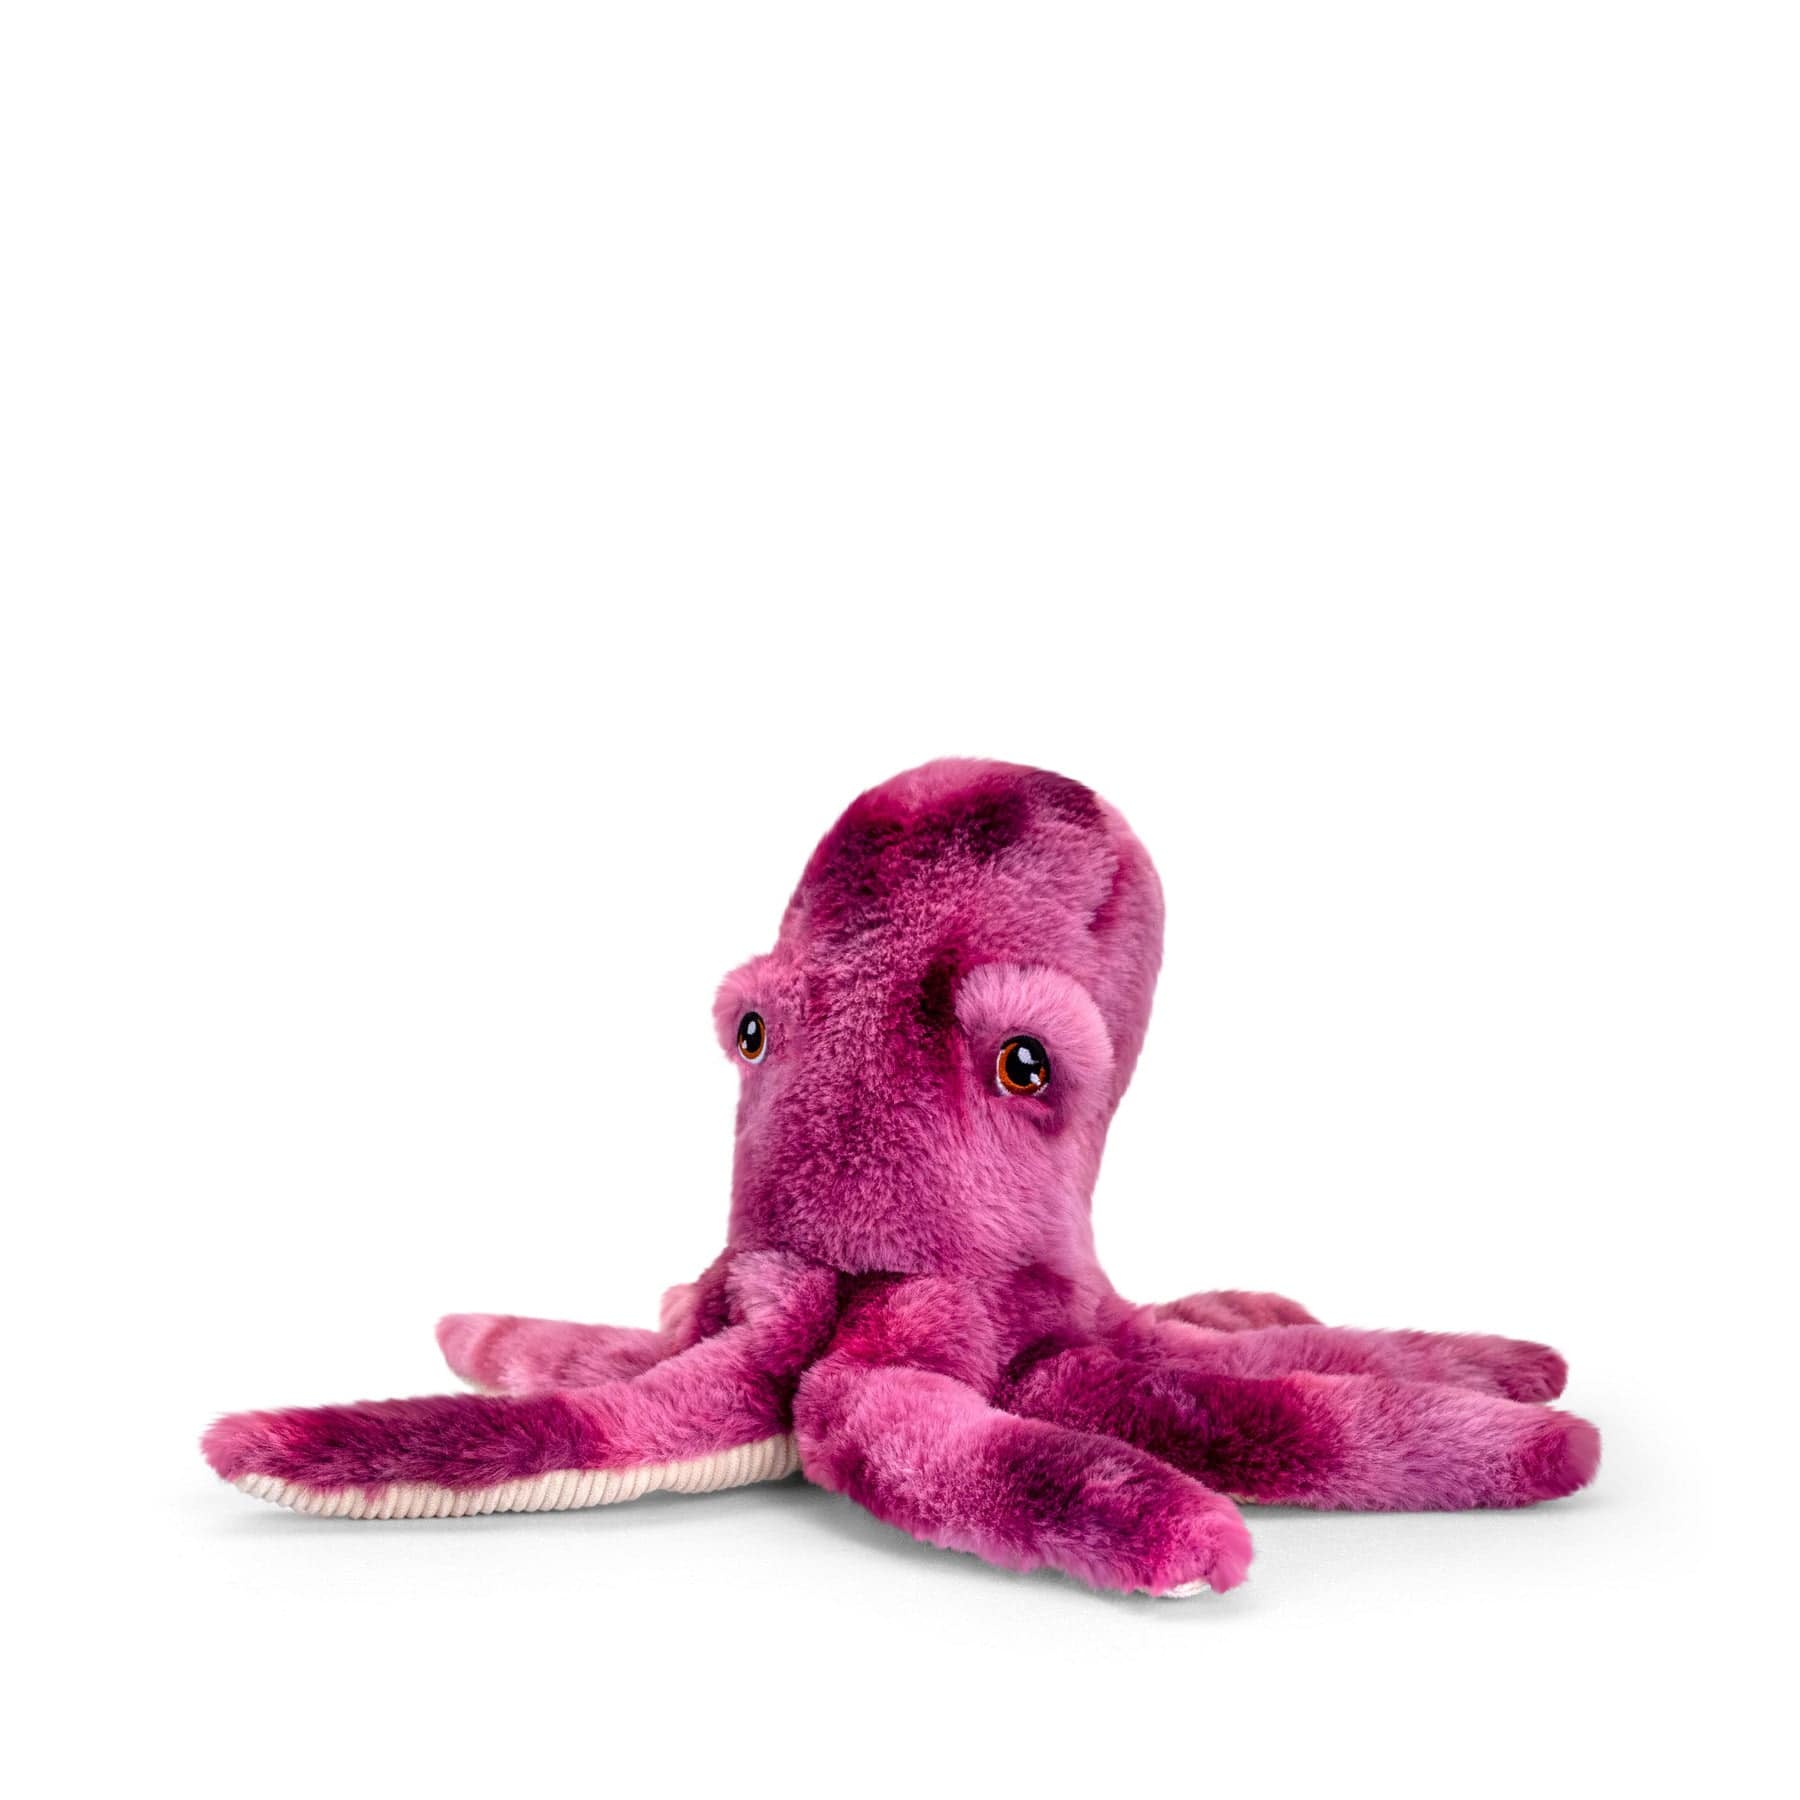 Keeleco octopus 25cm